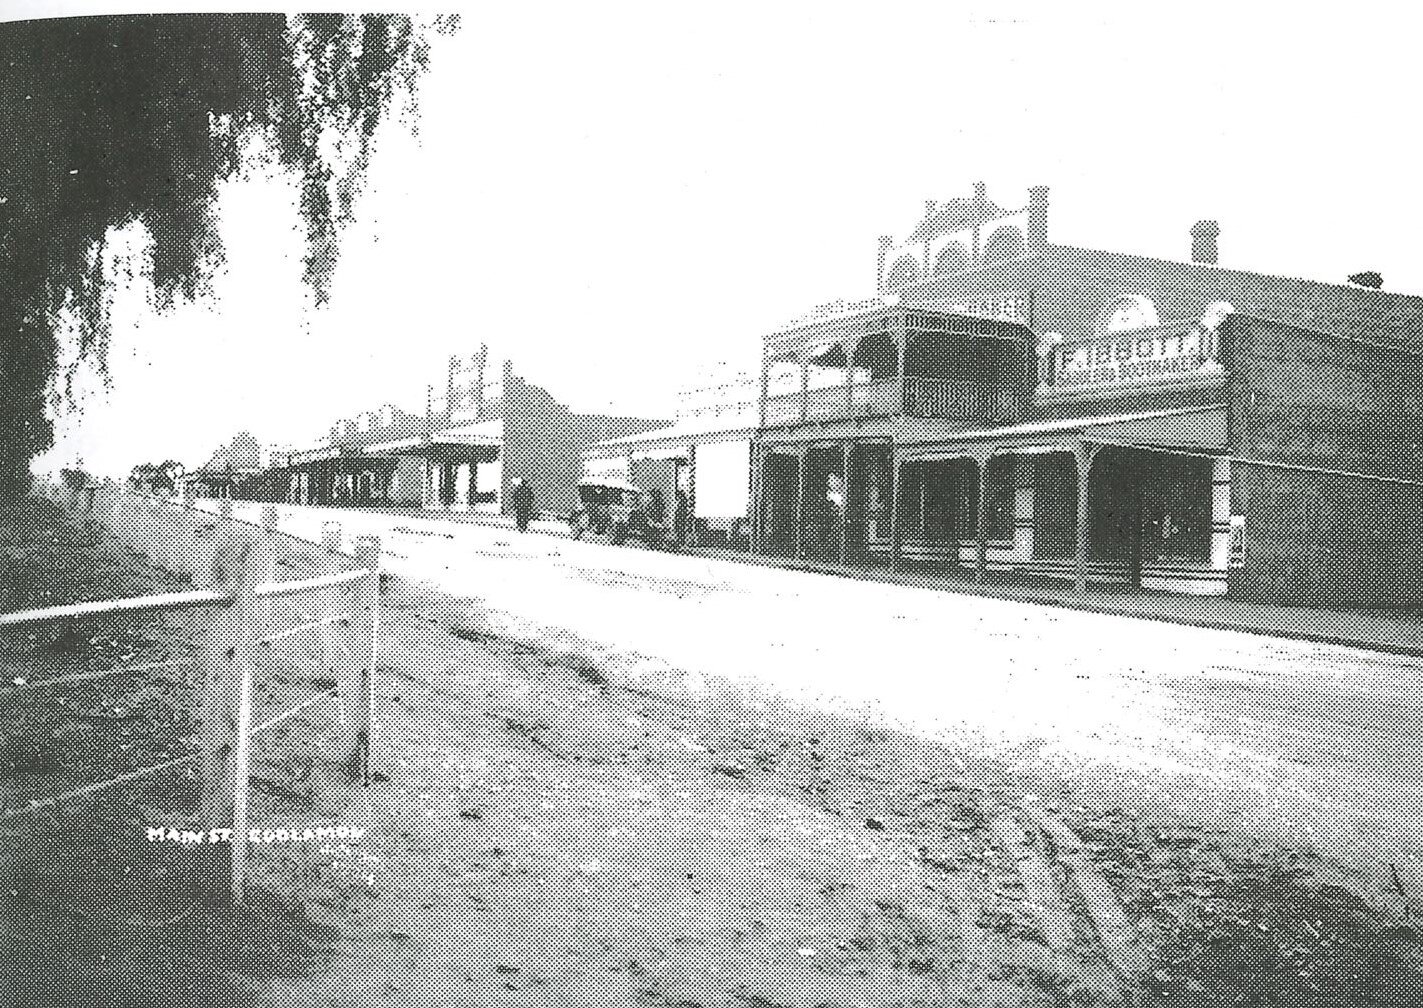 Coolamon Main Street 1924'.jpg